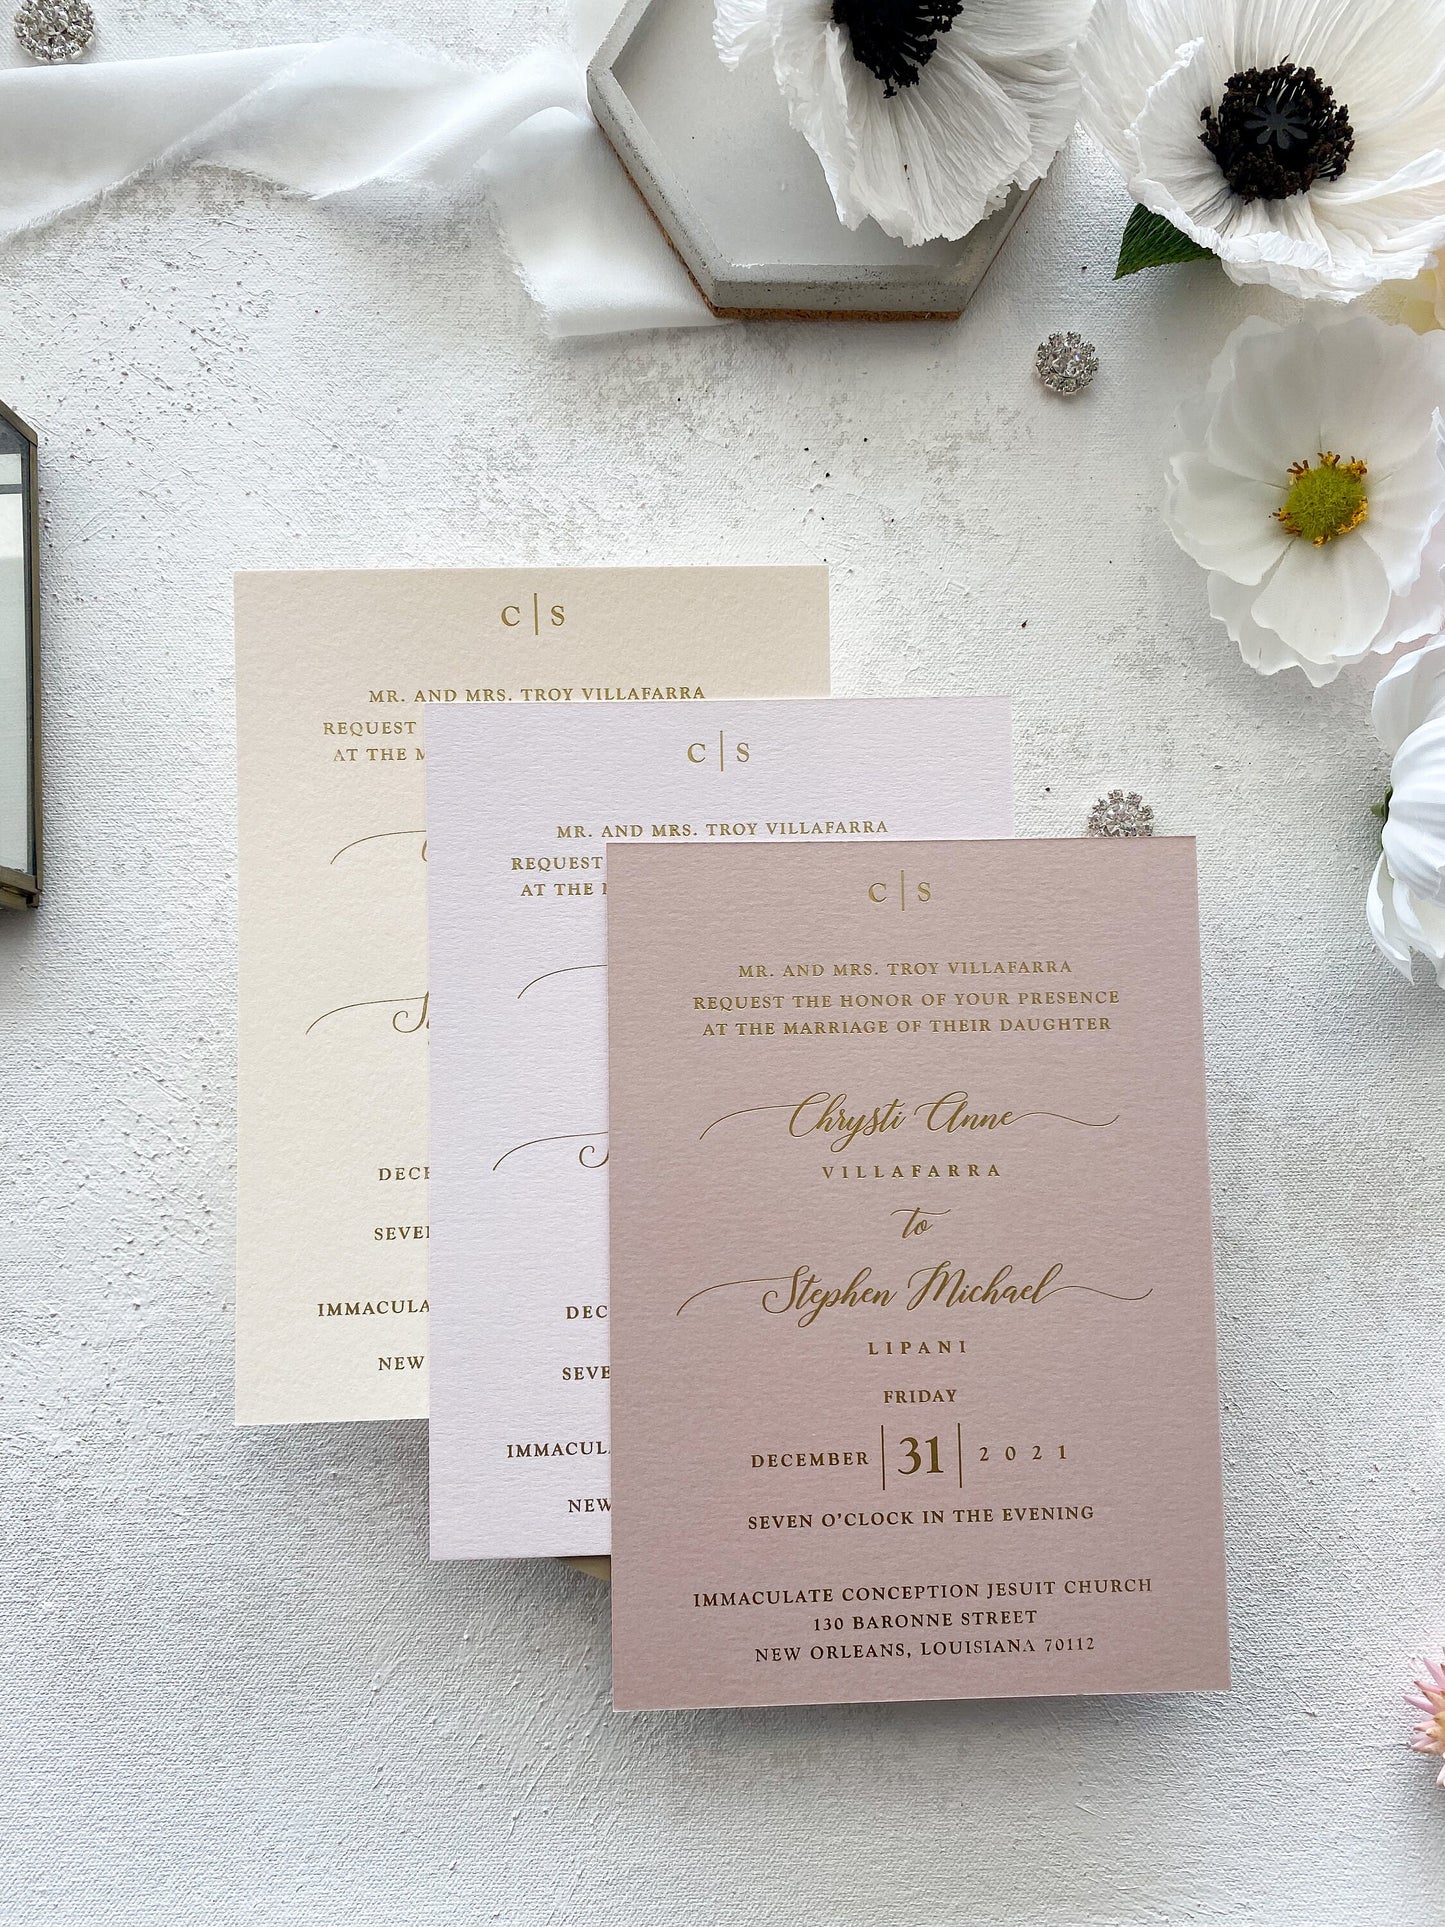 Gold Foil on Shimmer Cards Wedding Invitation 105# Cardstock - Style 45